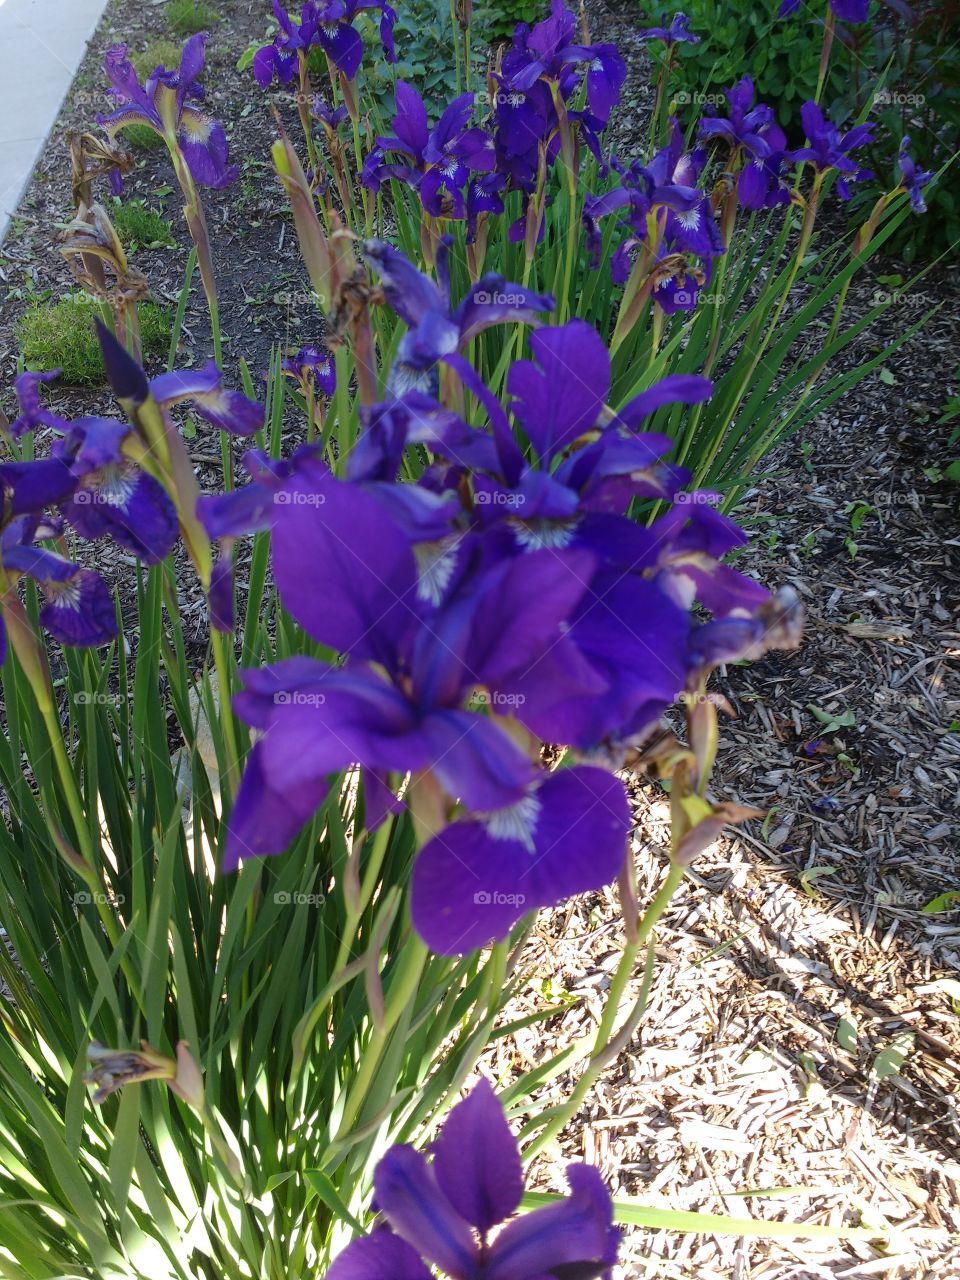 pretty flower in a friend's yard